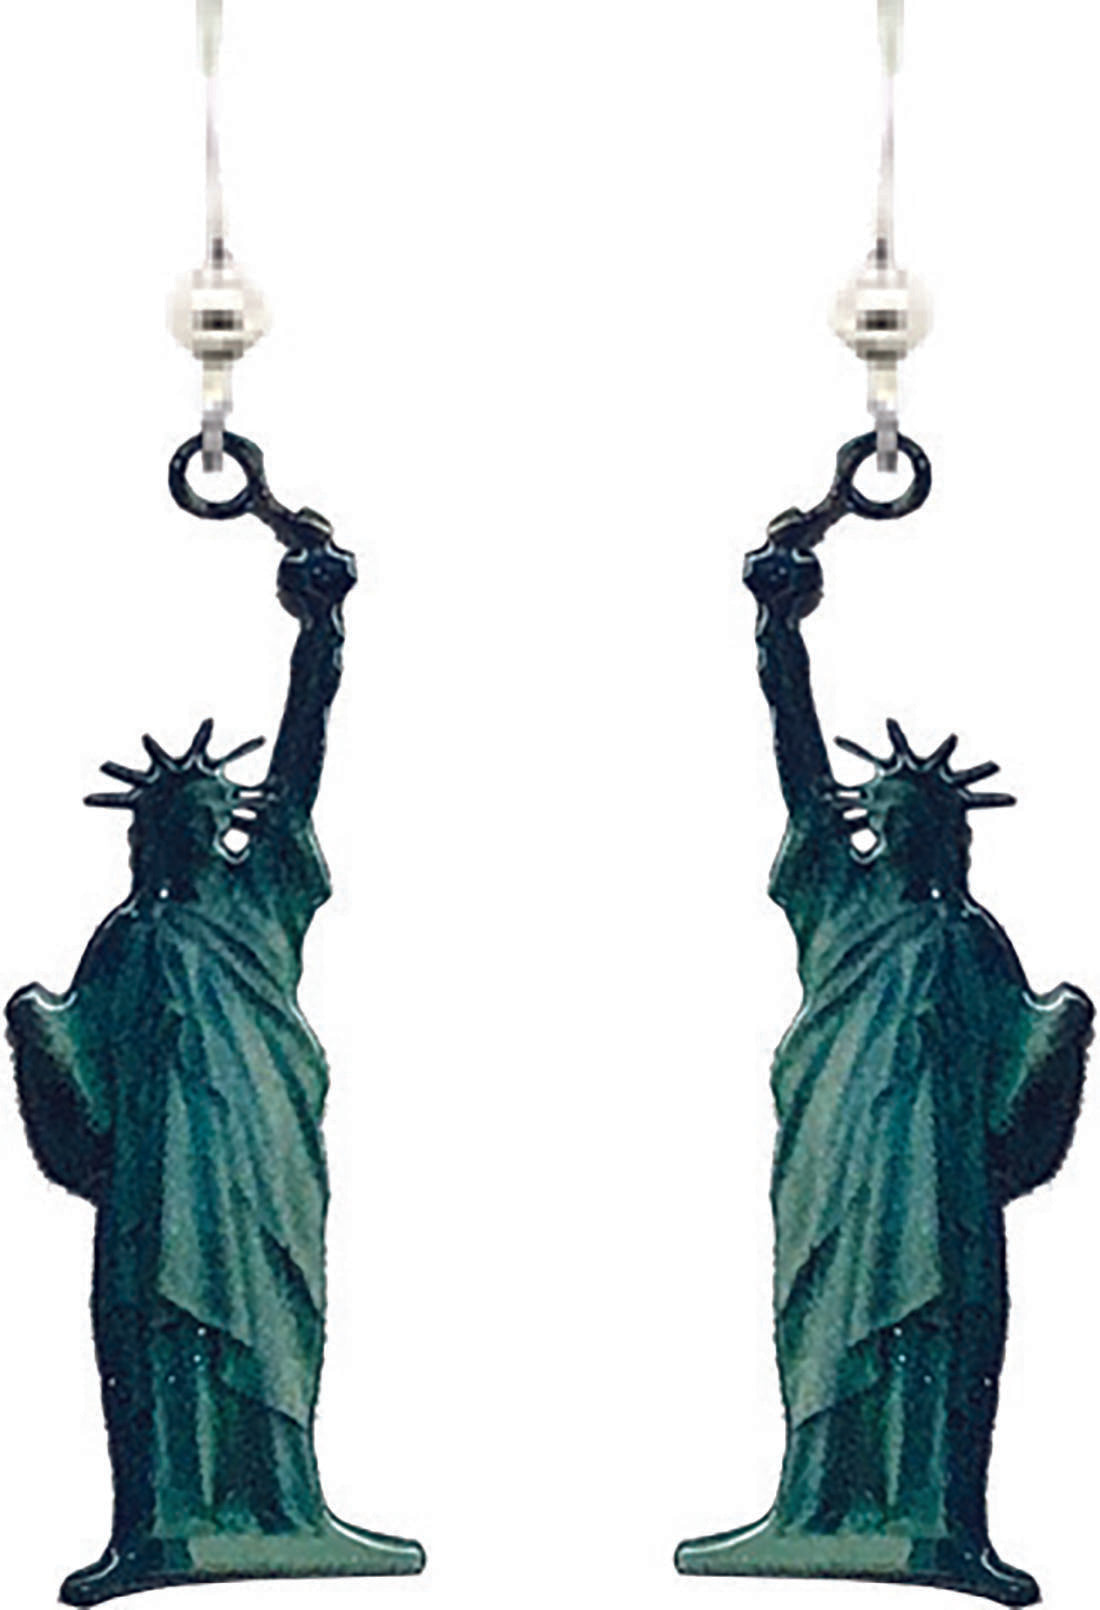 Statue of Liberty Earrings